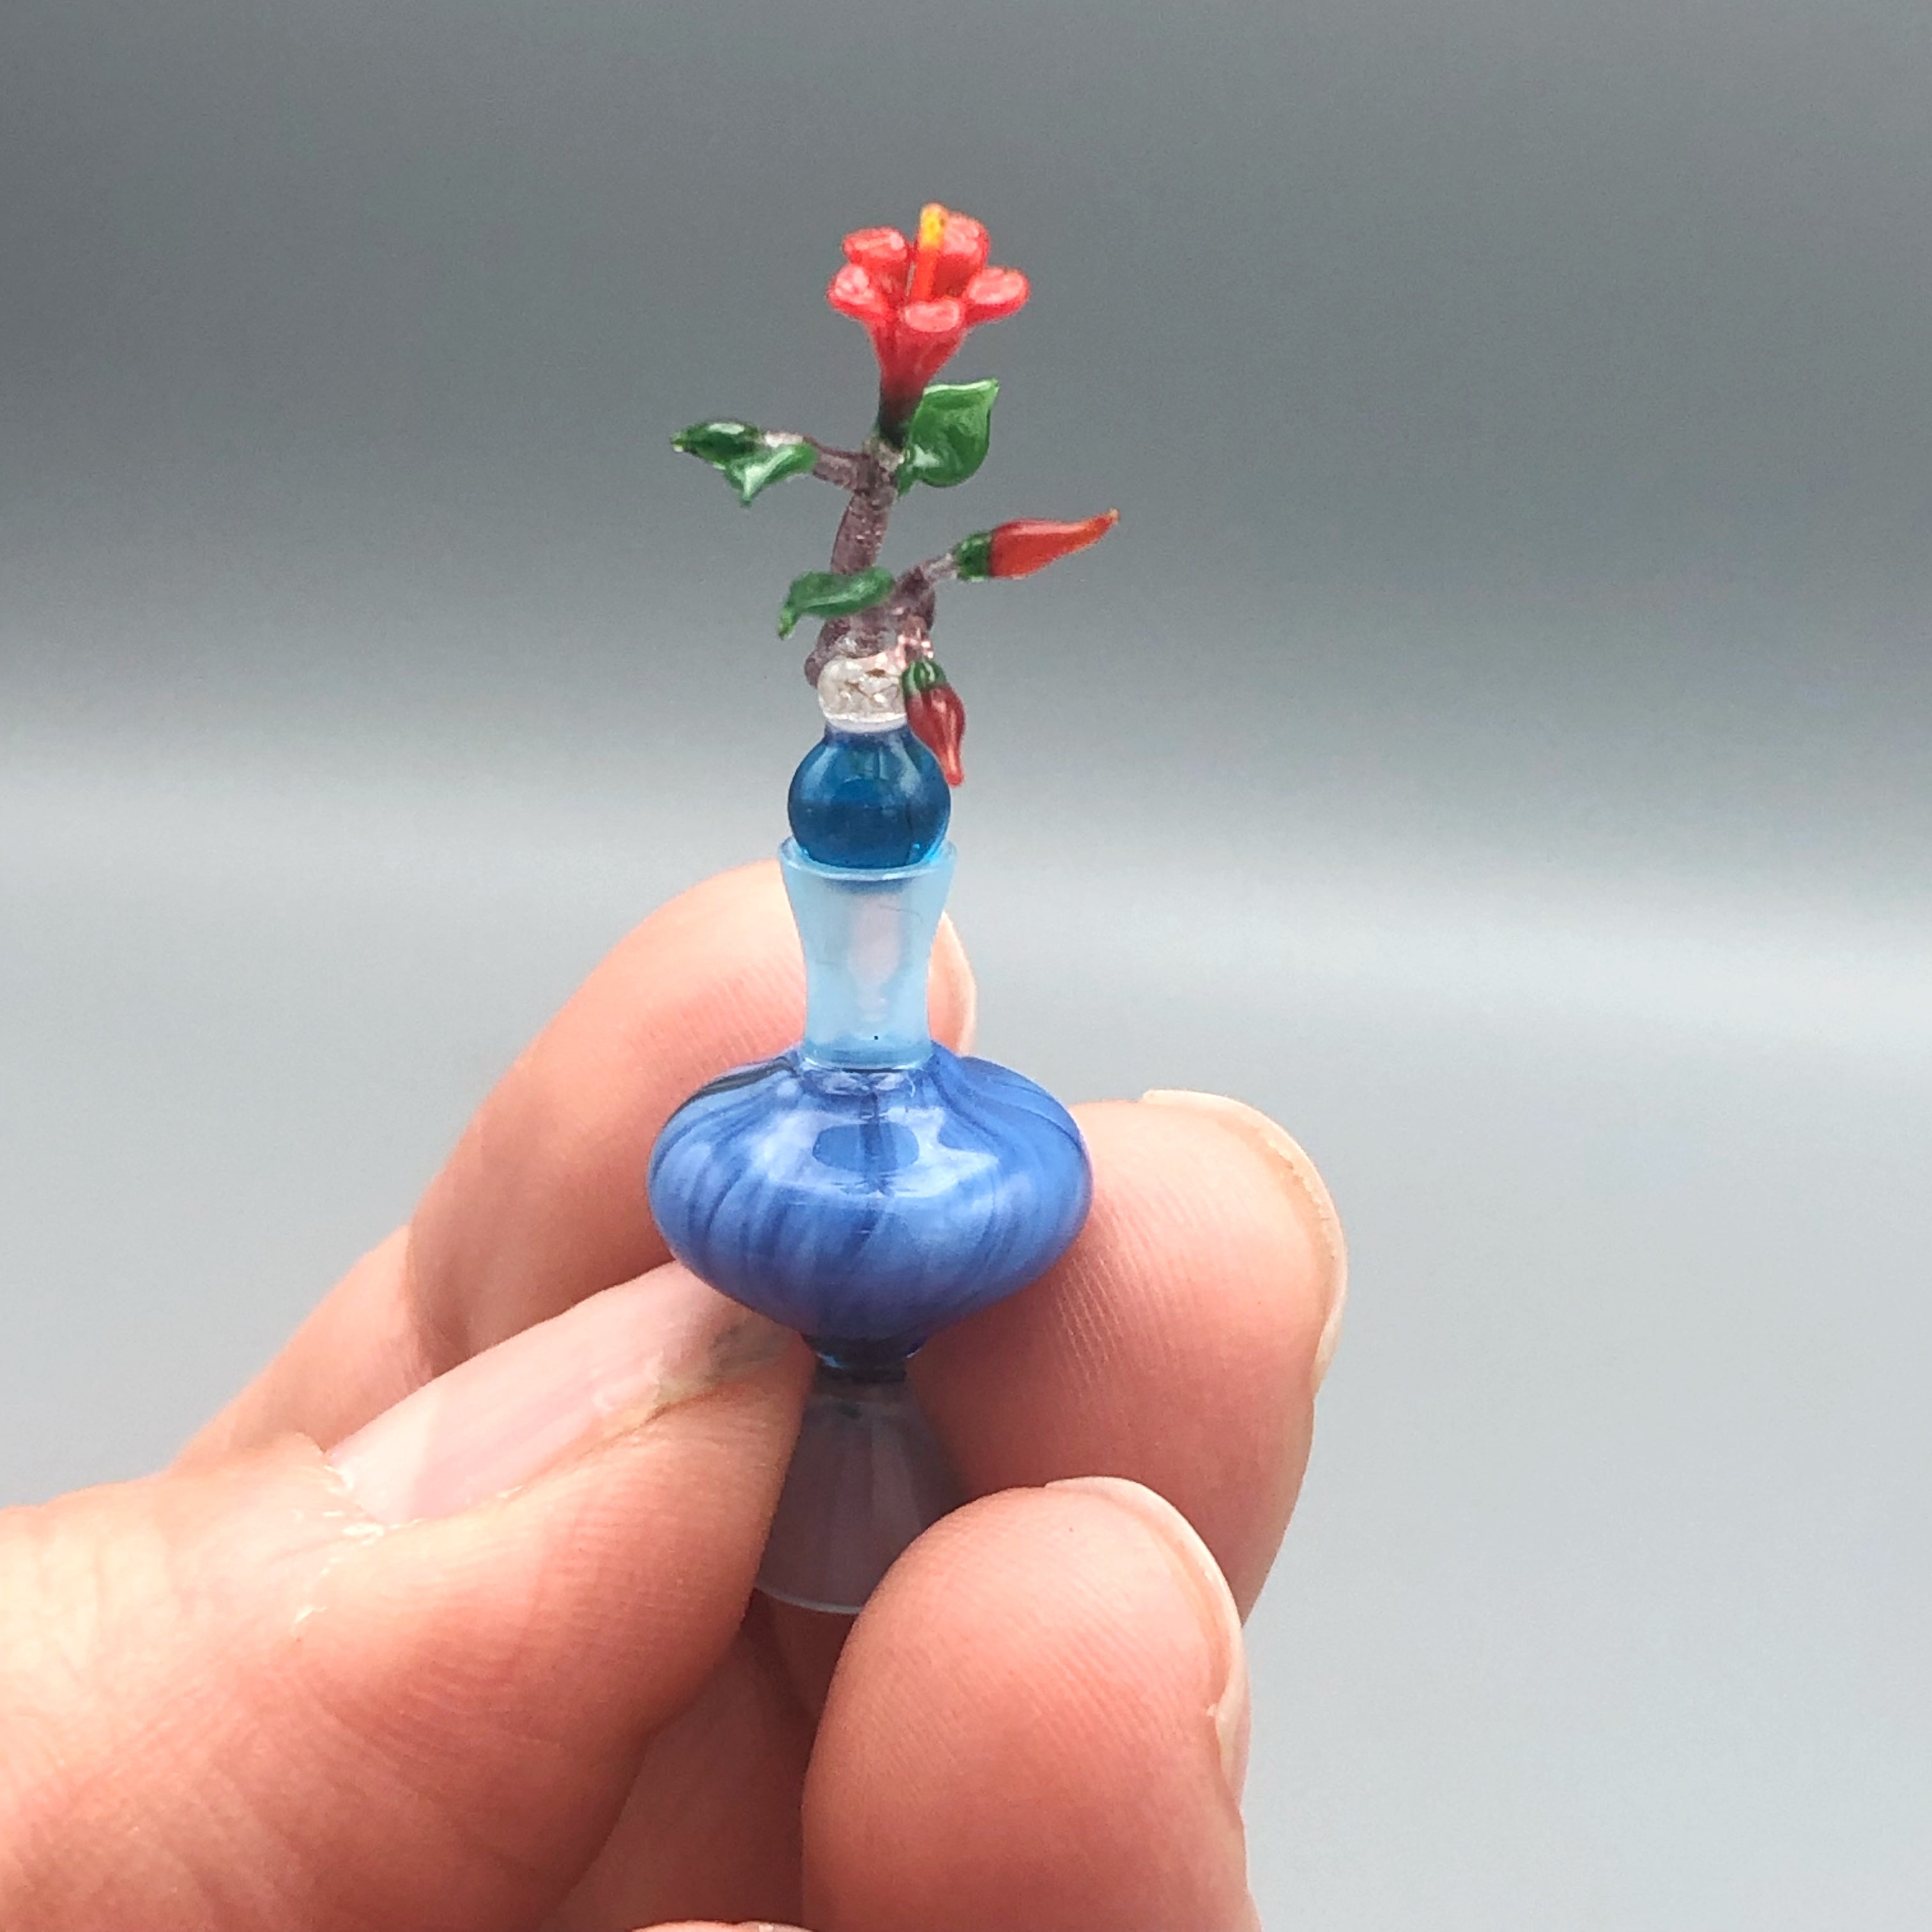 Miniatura de Cristal Jarrón con Flor Hibiscus